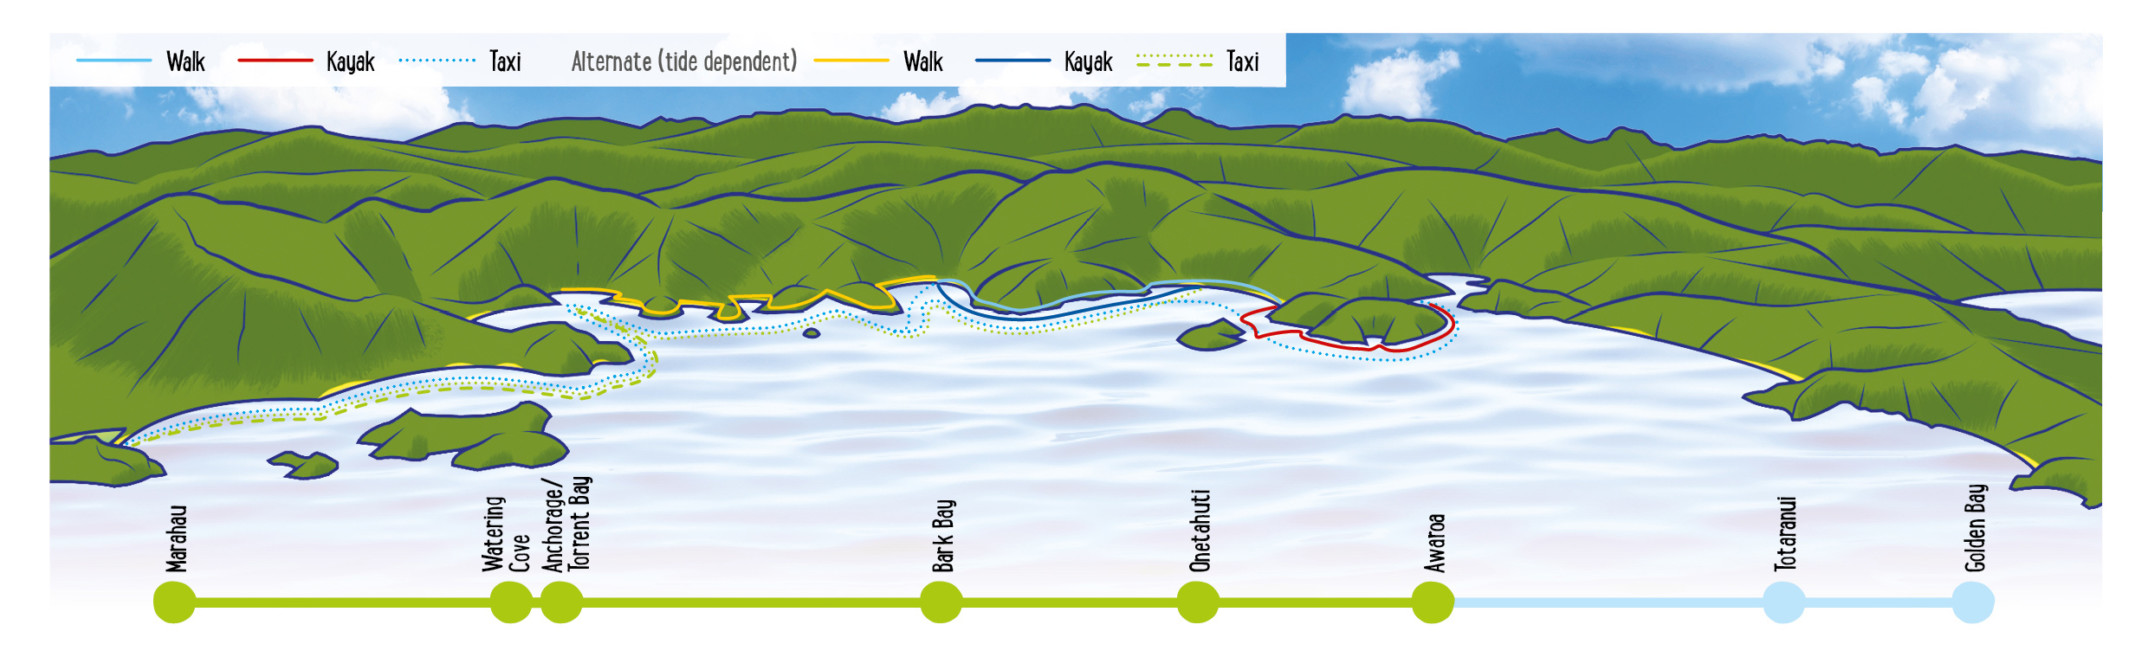 Two Gods with Alt Map - Abel Tasman Kayaks